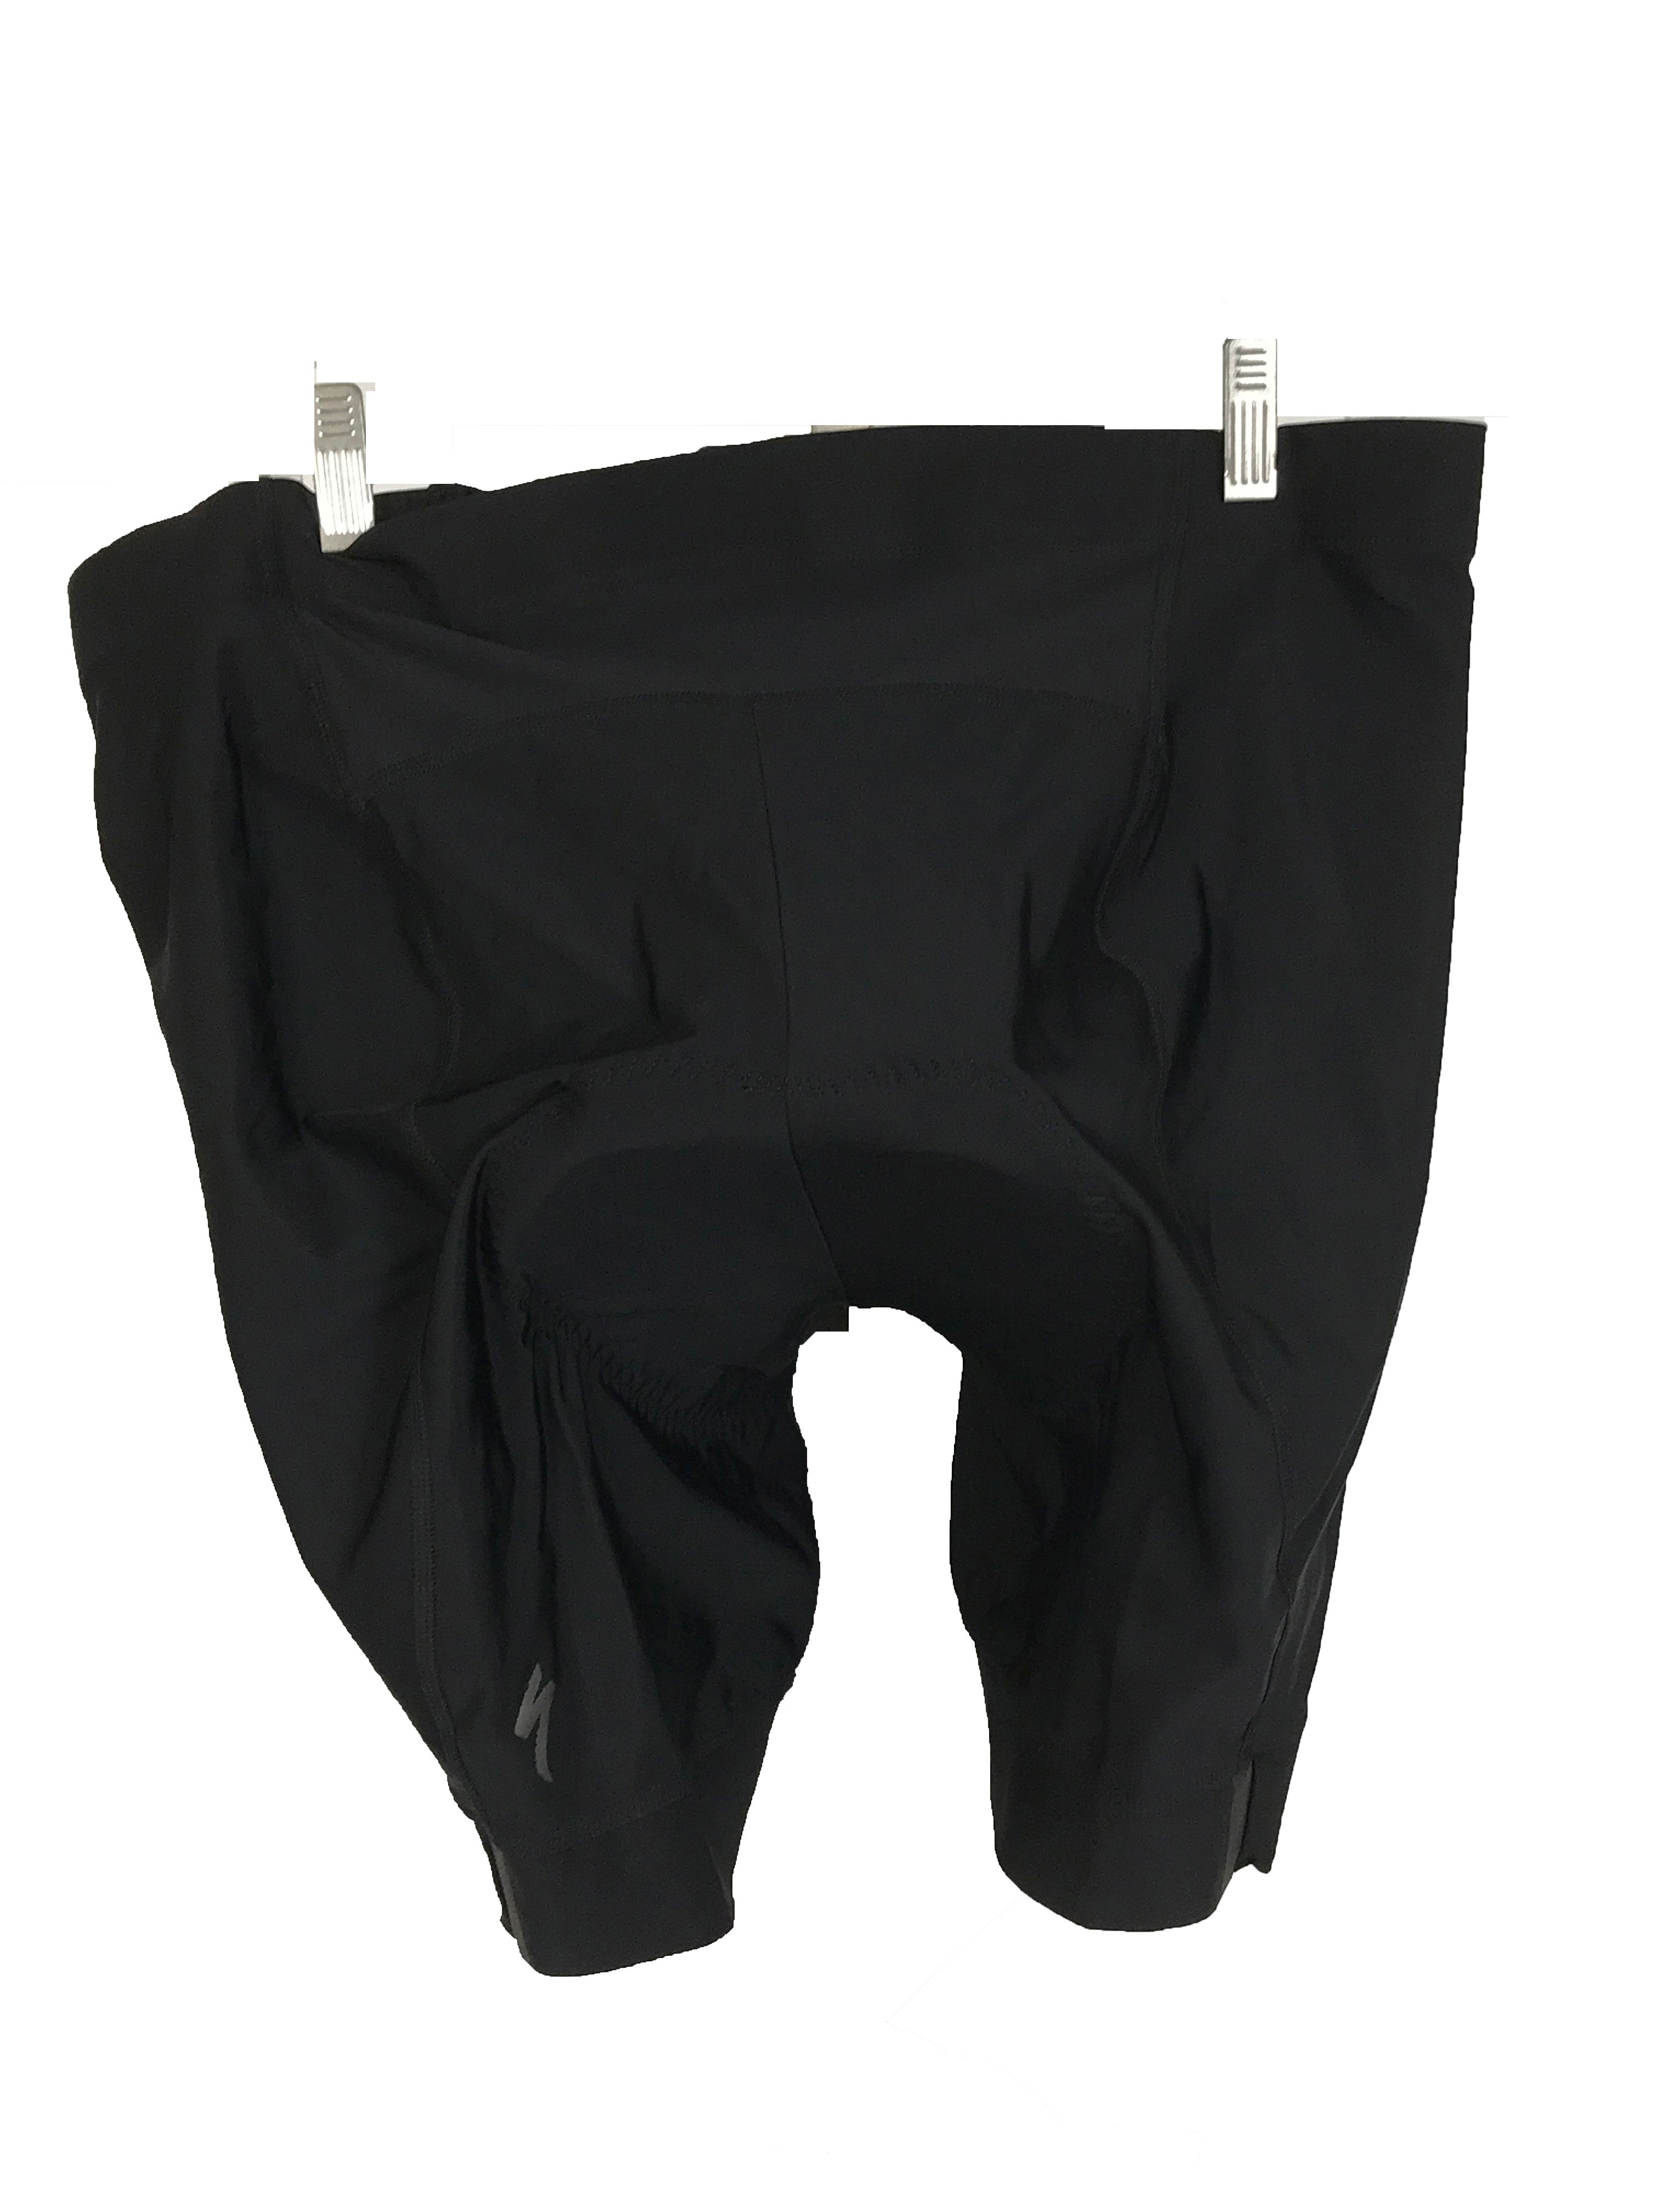 Specialized RBX Black Shorts with Chamois Women's Size 2XL NWT